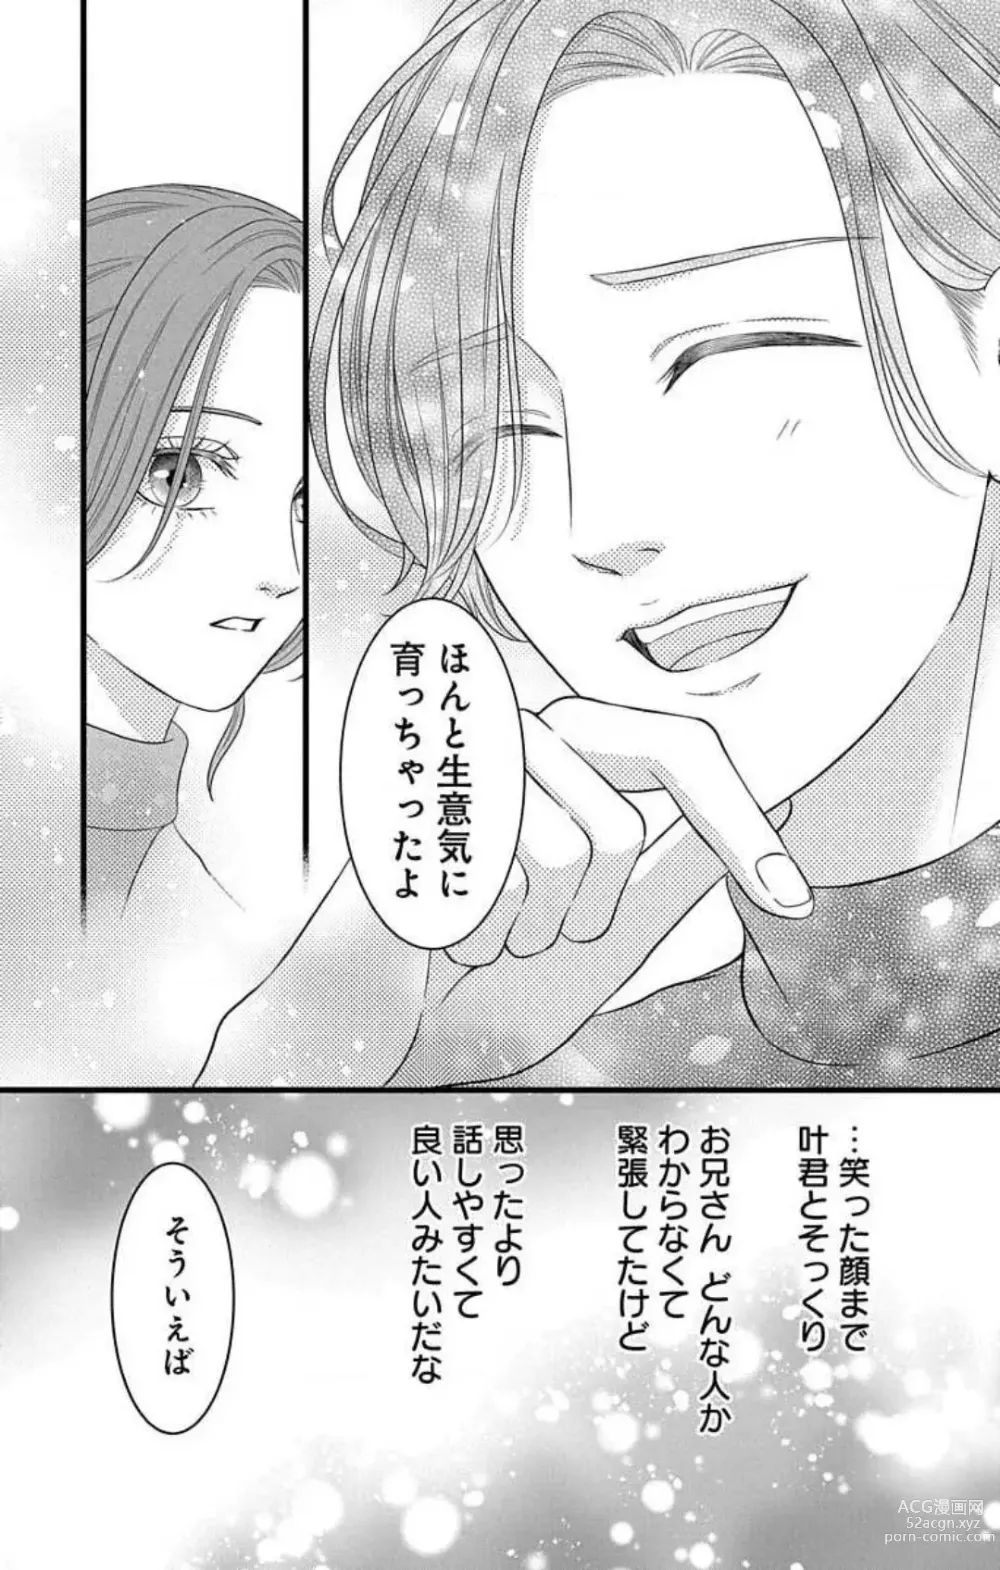 Page 265 of manga Mousou Shoujo 21-27